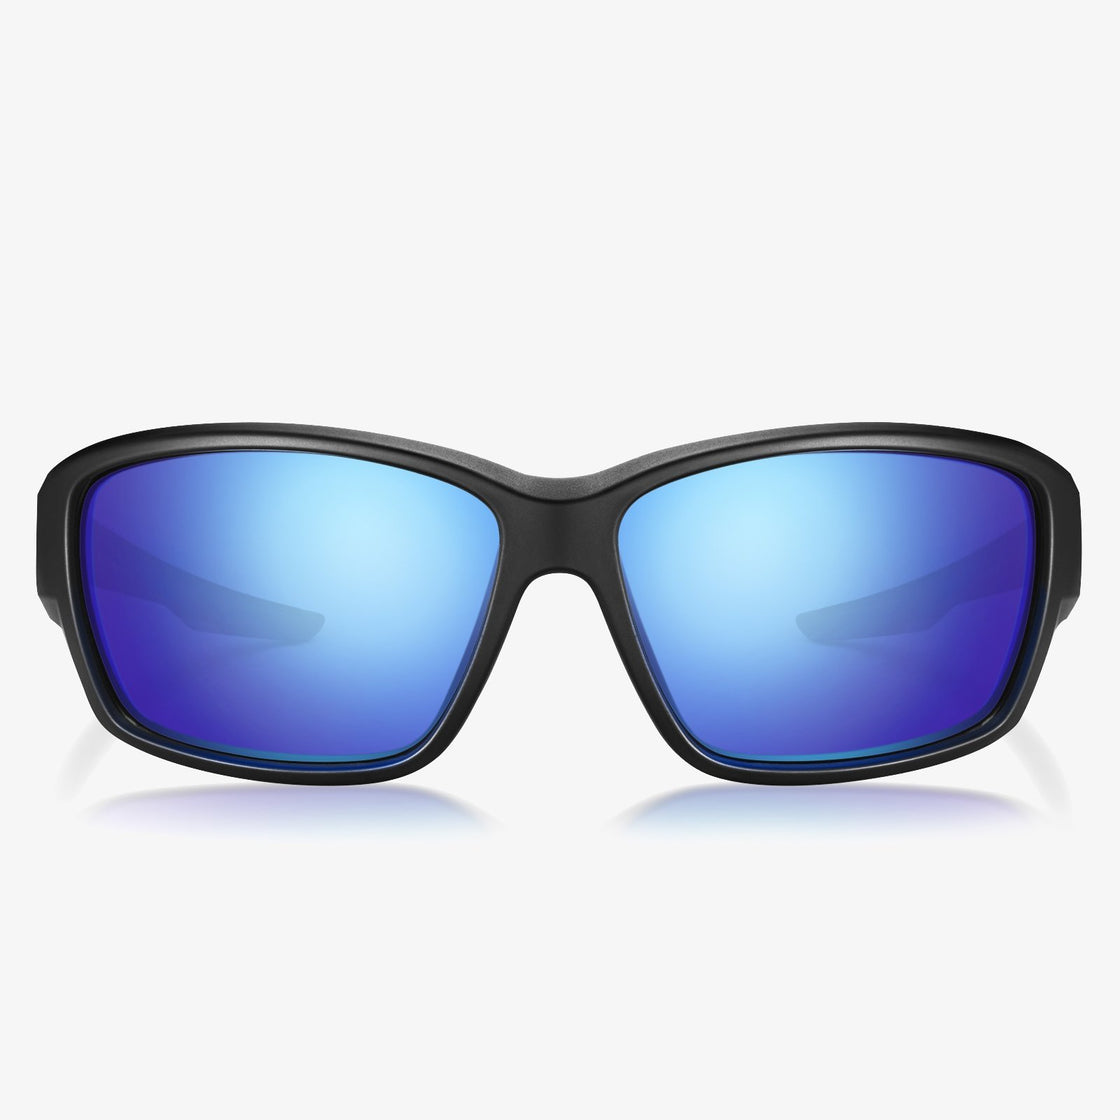 Men's Sports Sunglasses, Polarized Sports Sunglasses